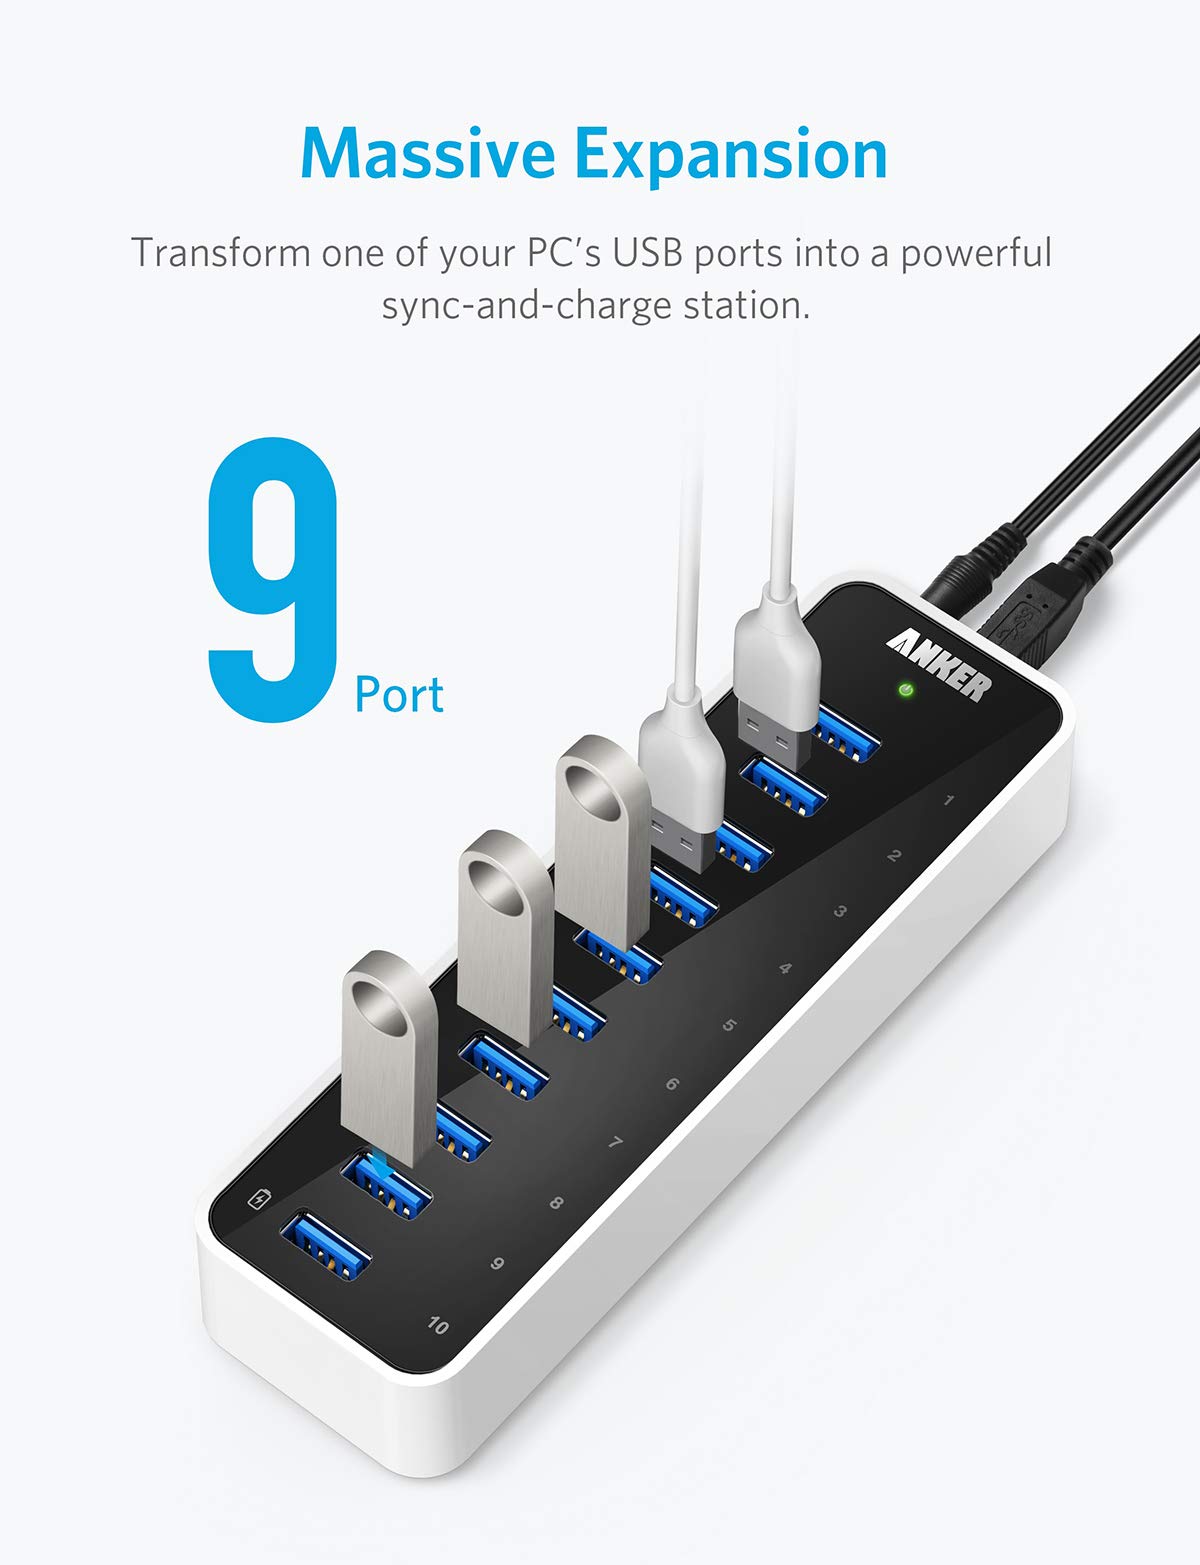 Tikier 10-port USB 3.0 hub review - handy if you're all thumbs